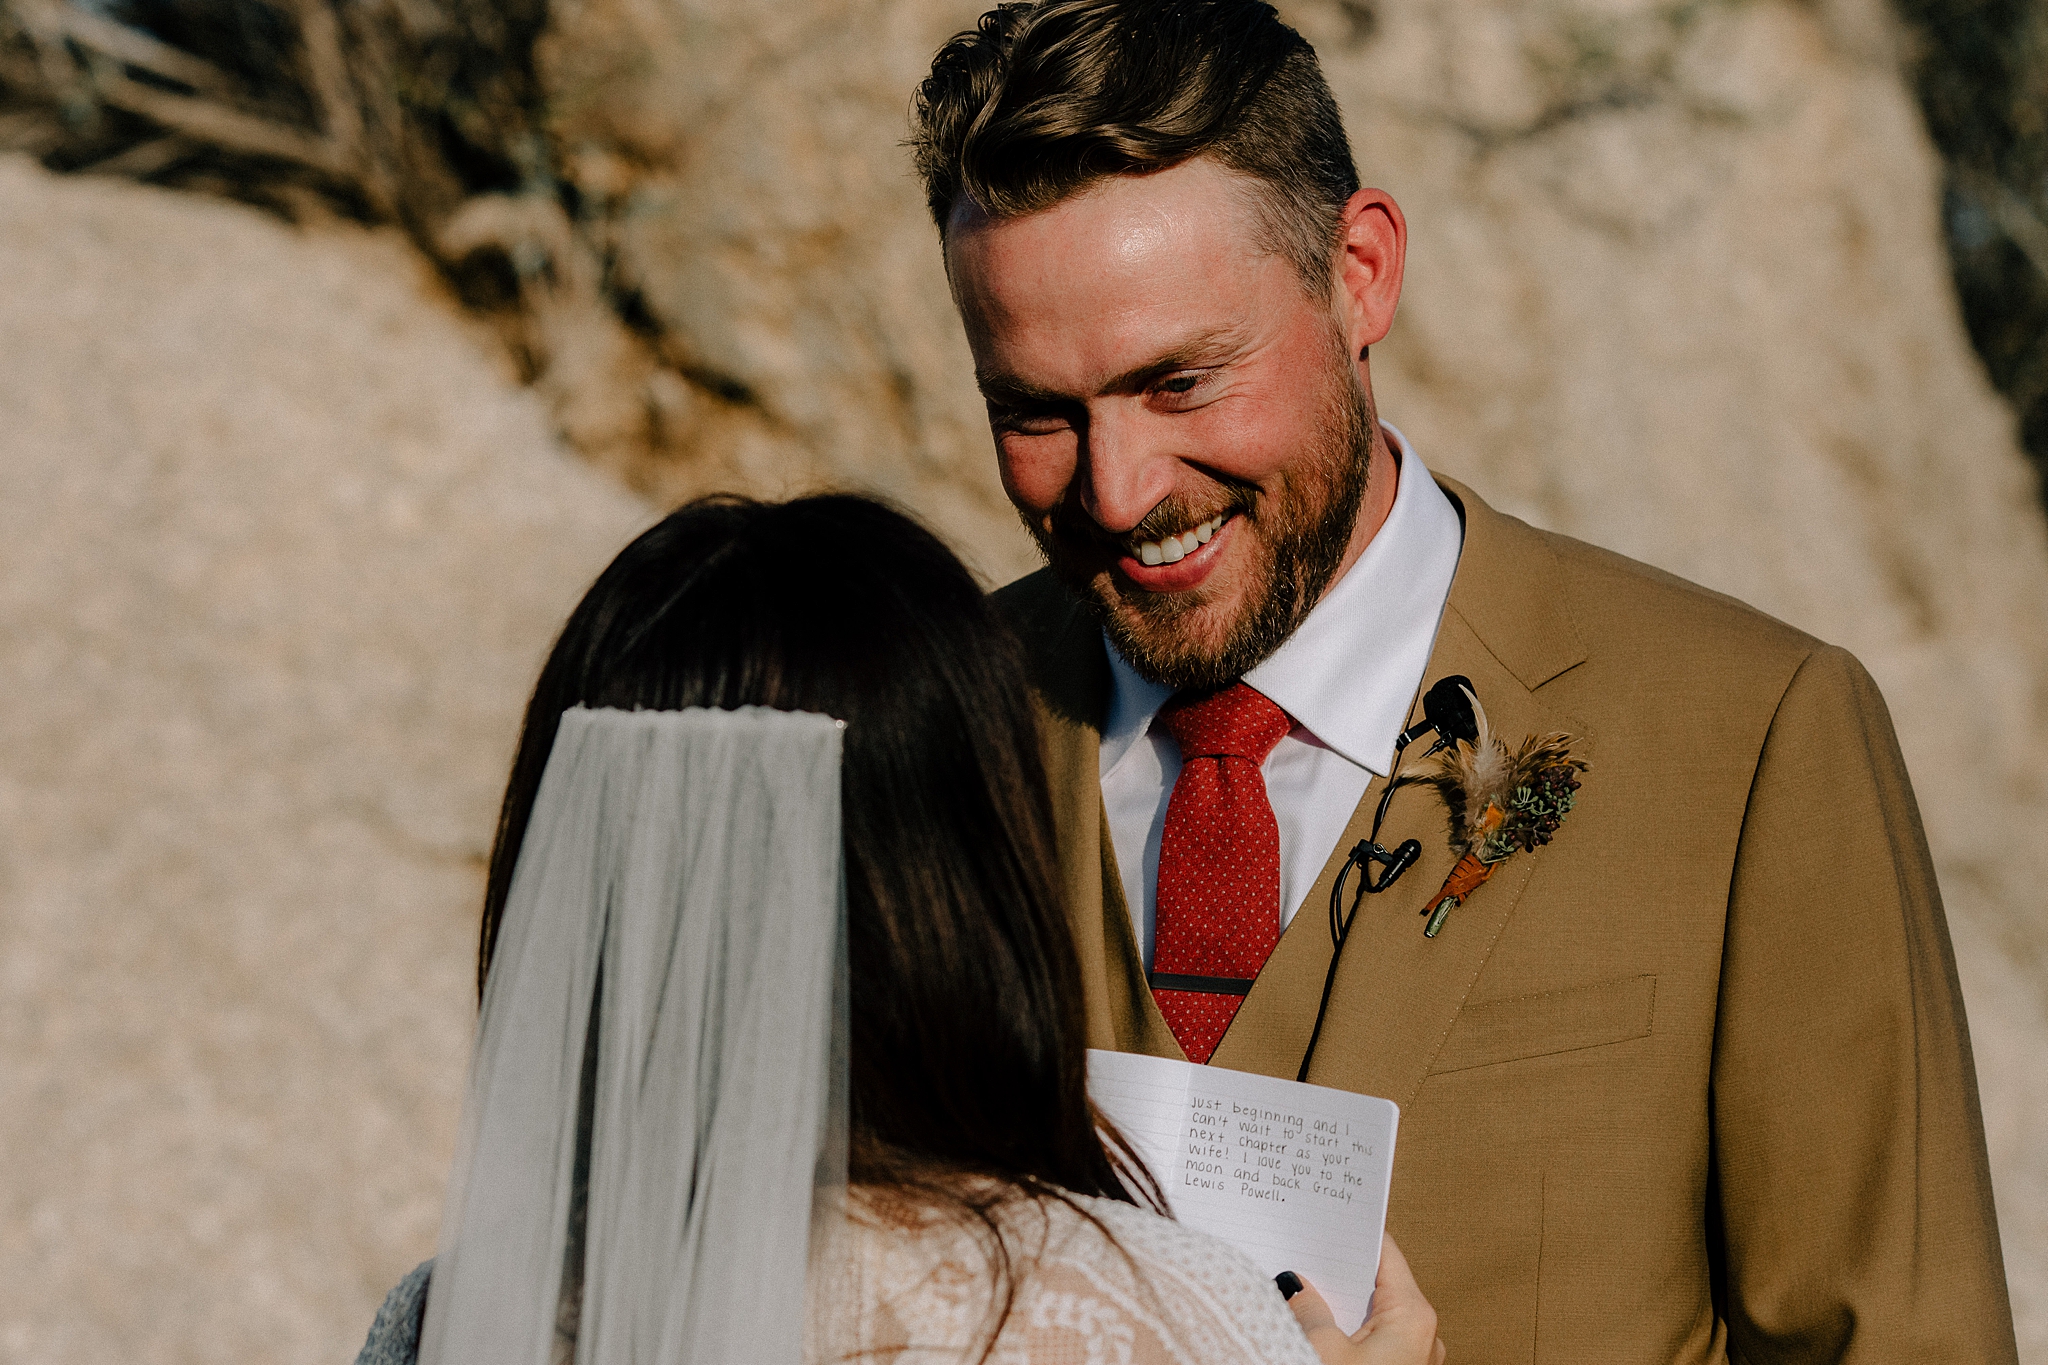 Scottsdale Wedding Photographer, Phoenix Wedding Photographer, Aaron Hoskins Photography, The Boulders Resort Wedding, Bride, Groom, Ceremony